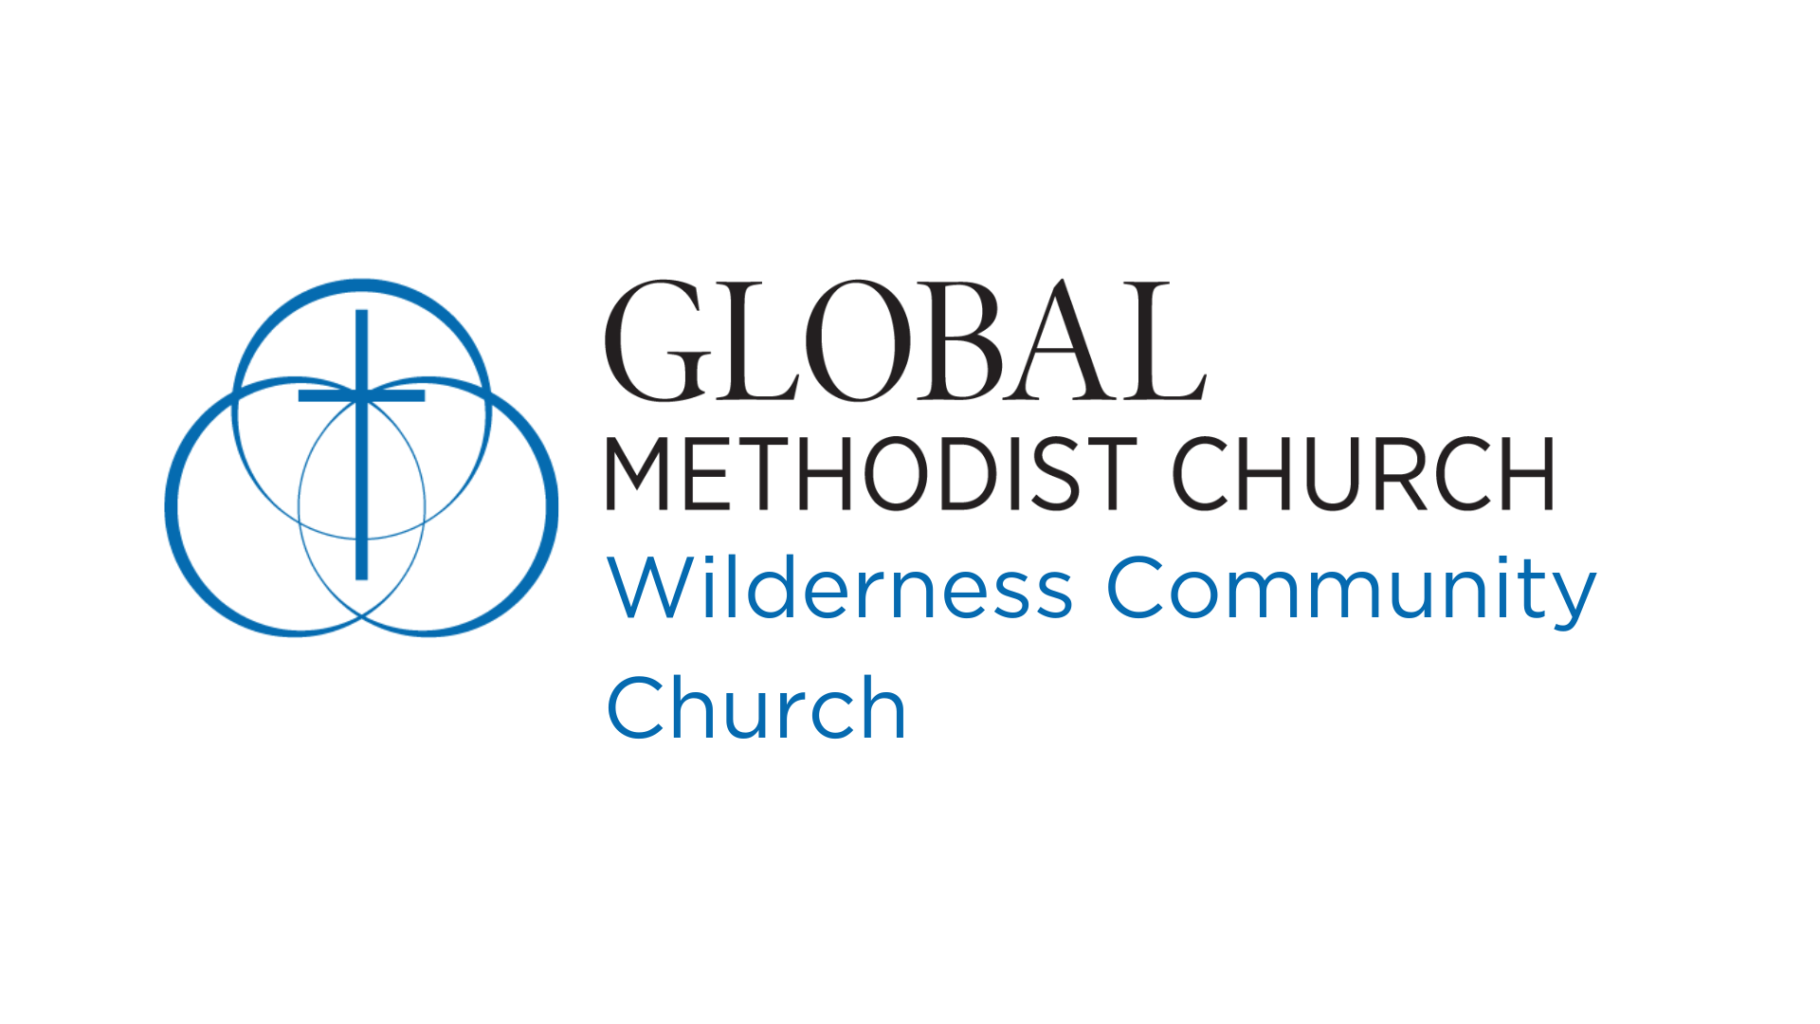 WCC GMC logo horiz